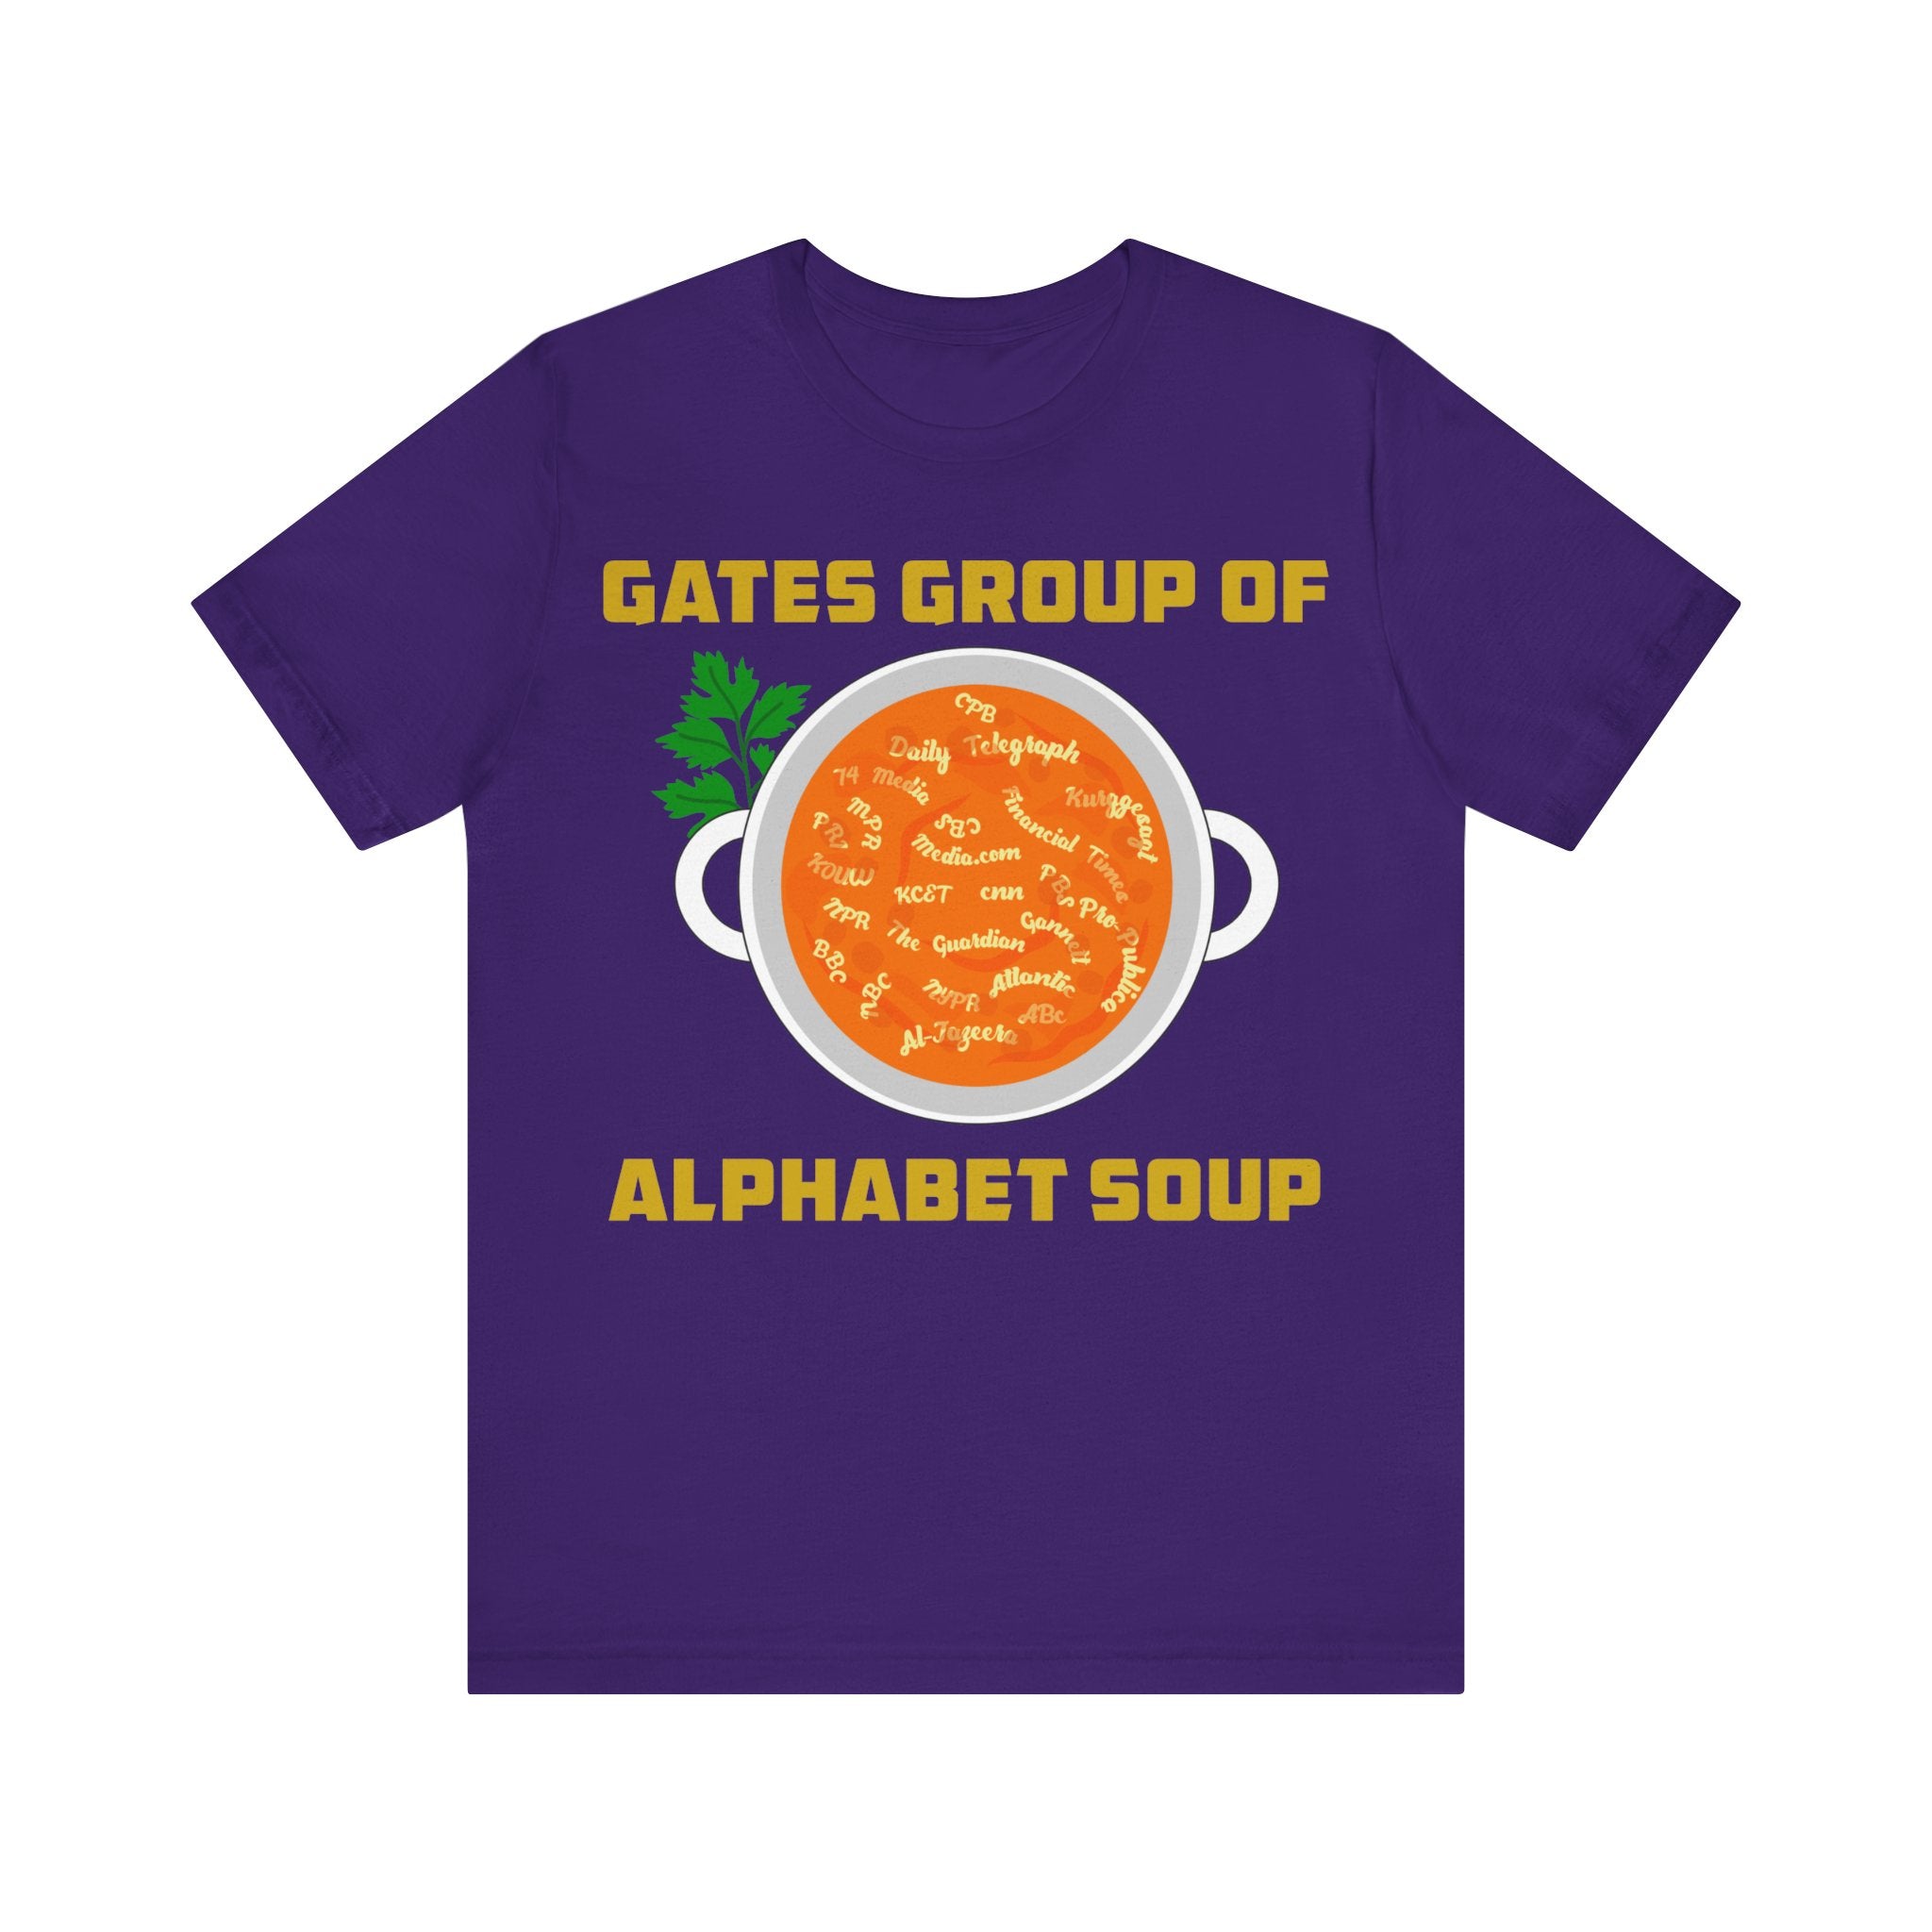 Gates Group of Alphabet Soup